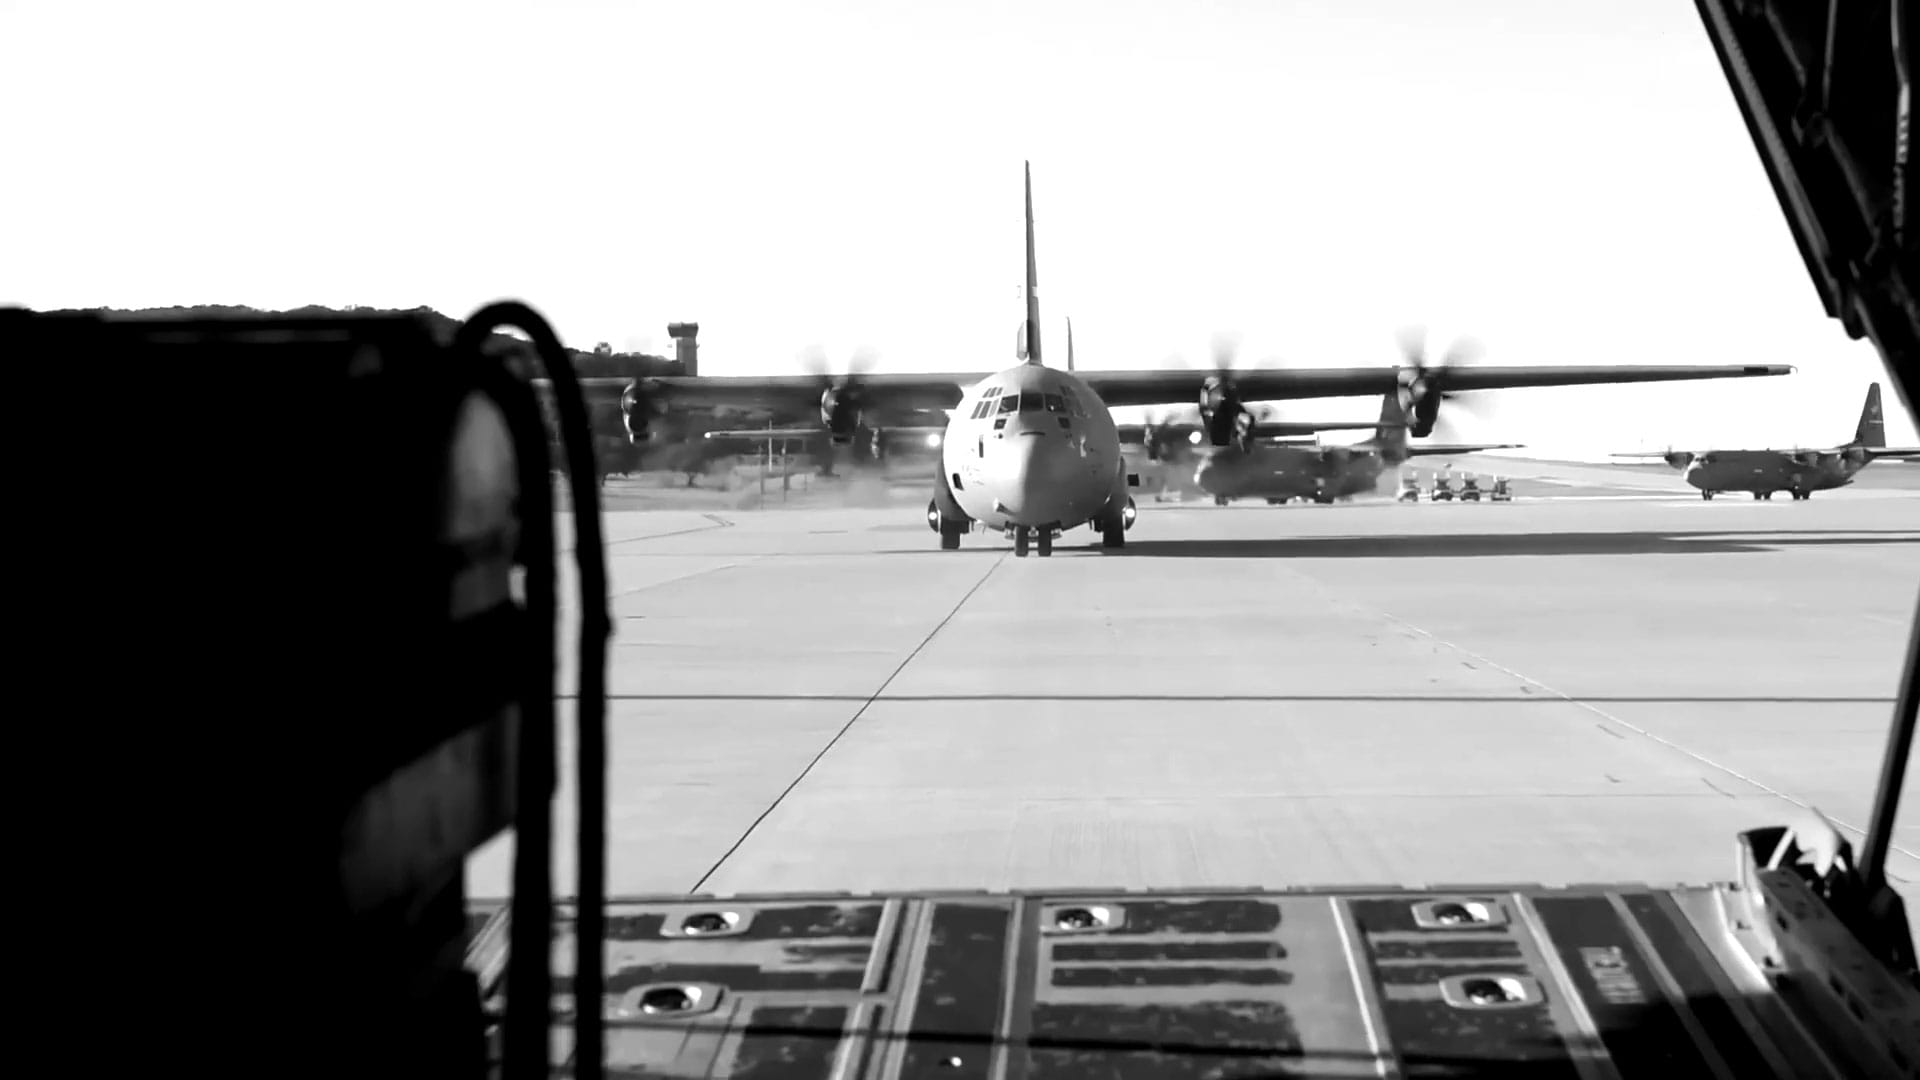 Military C-130 on ground